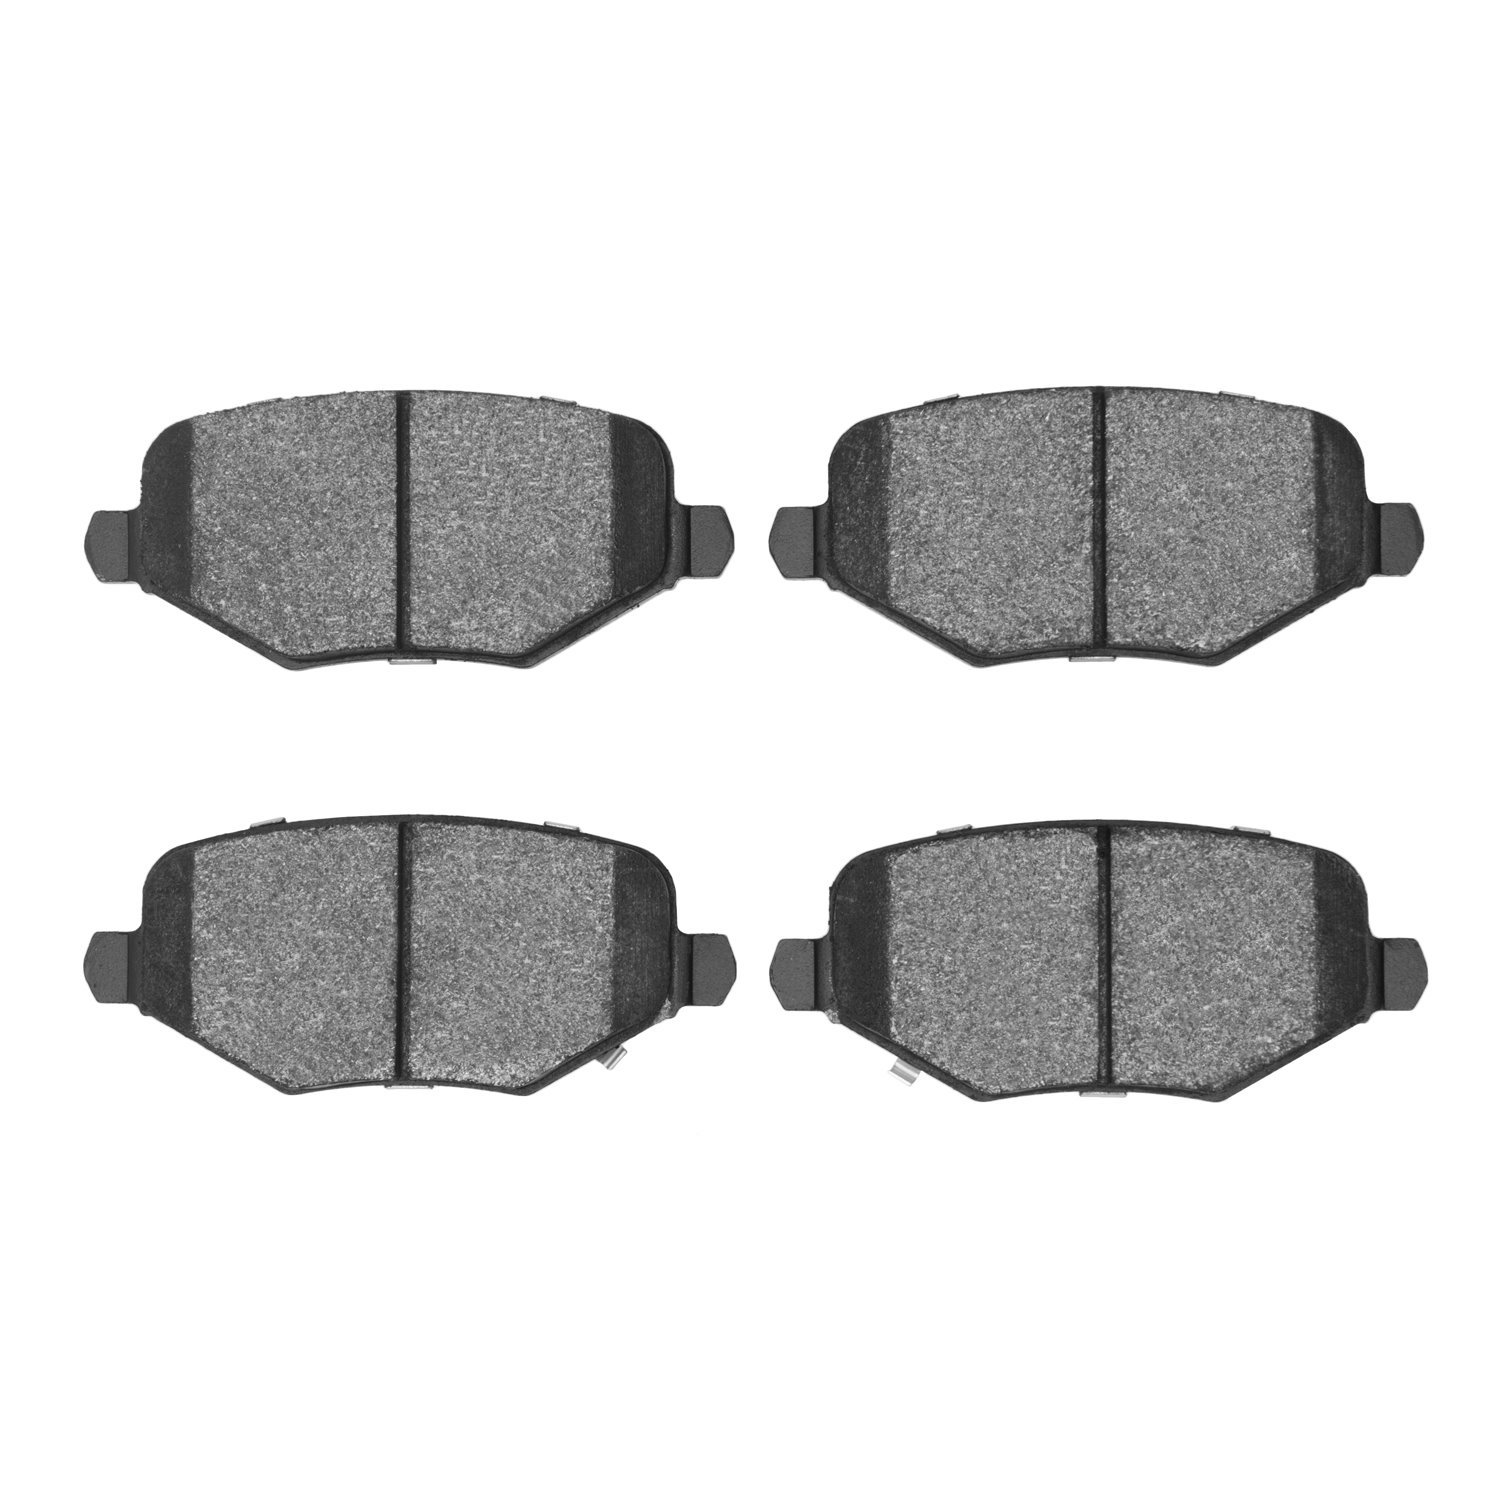 1310-1719-00 3000-Series Ceramic Brake Pads, 2009-2016 Multiple Makes/Models, Position: Rear